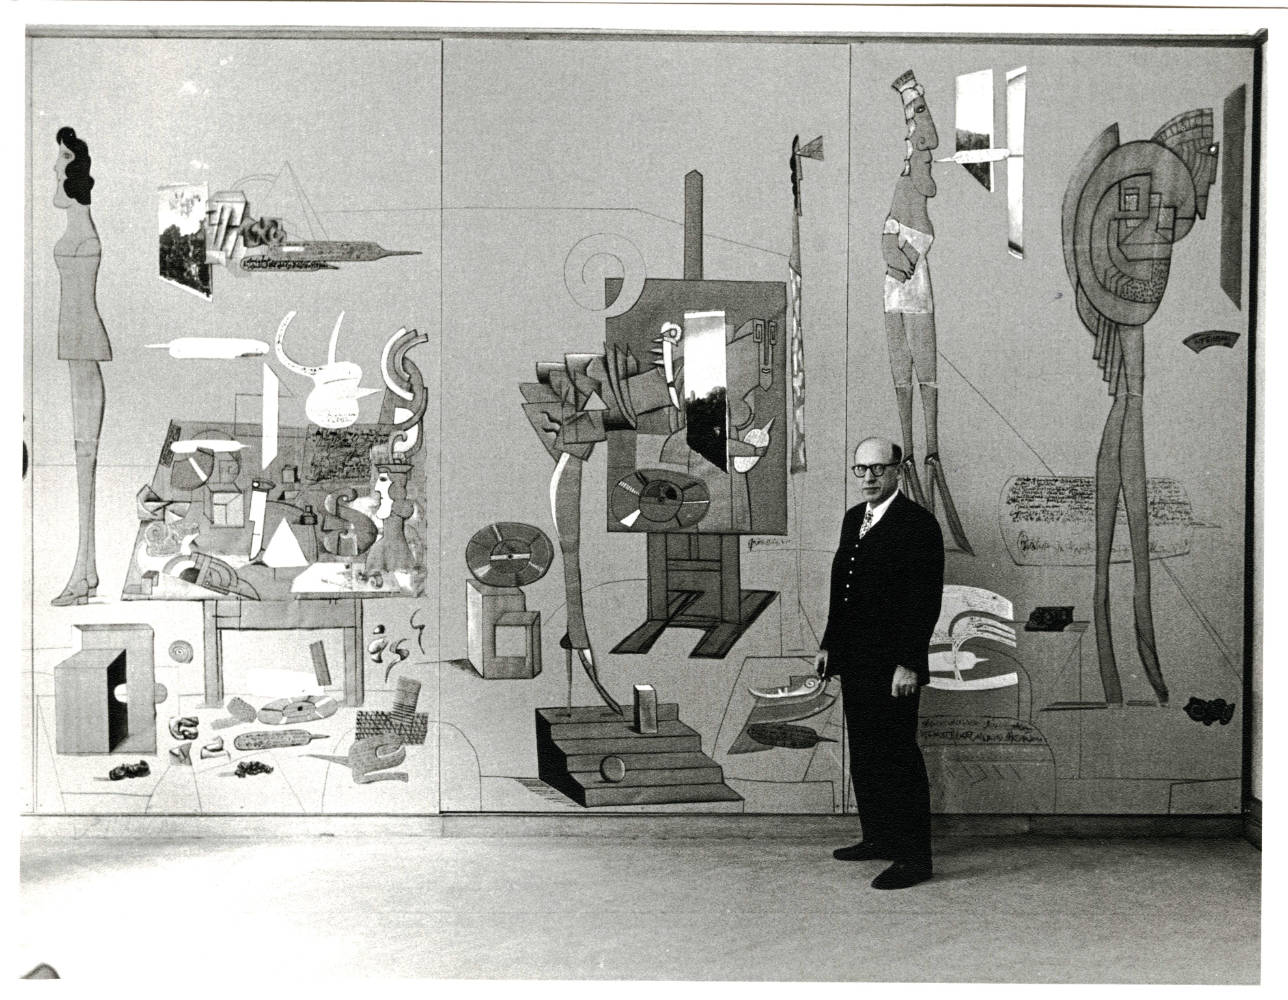 Steinberg with Art Viewers, Galerie Maeght, Paris, 1966.